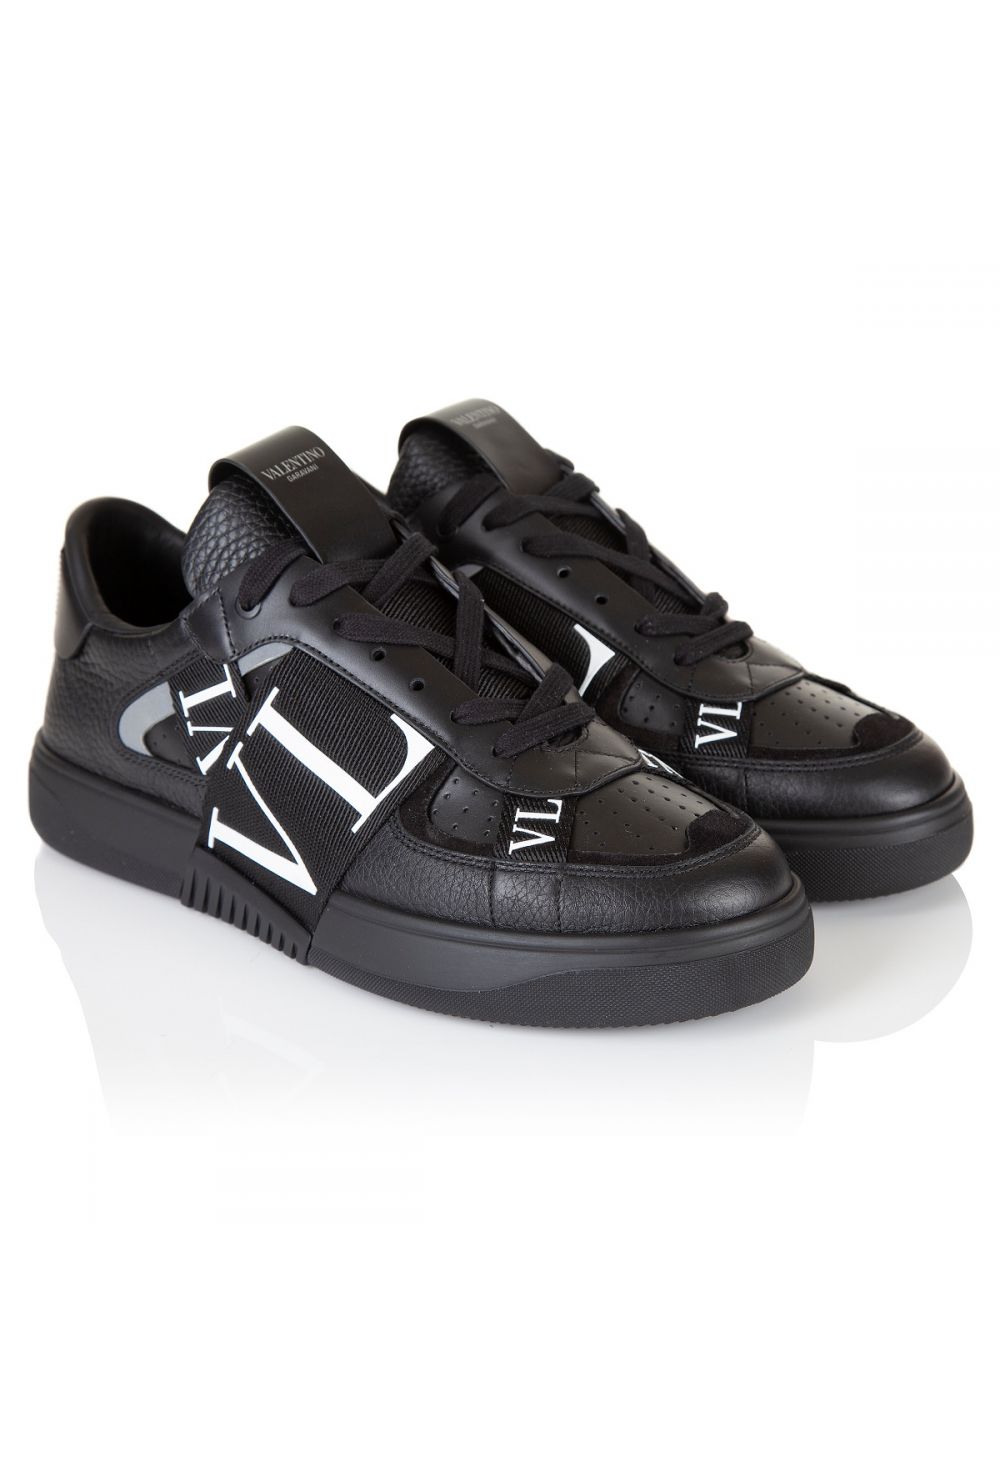 Valentino VL7N, black low top sneaker - Cavern Menswear